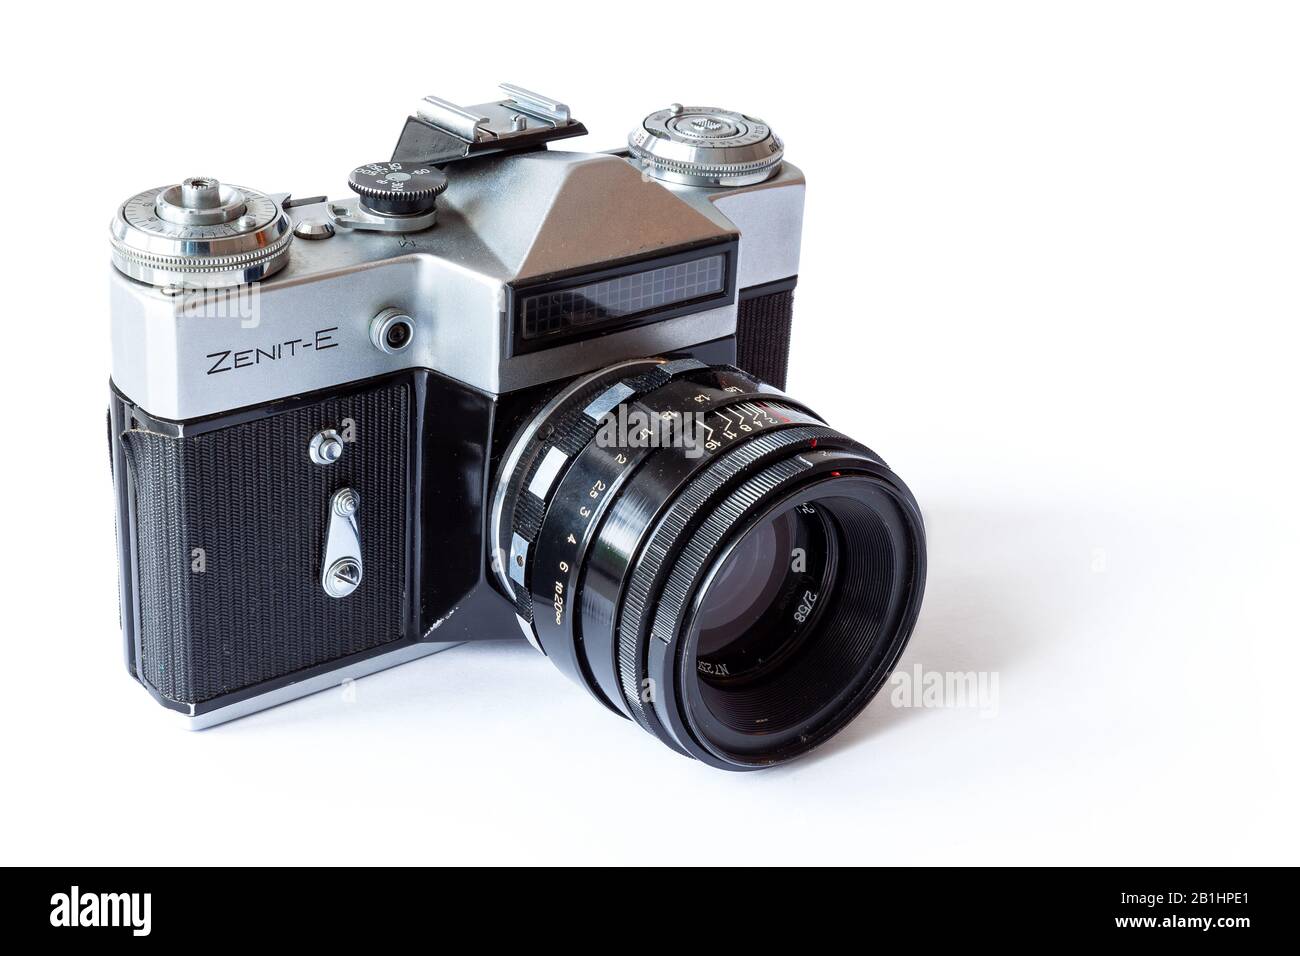 Zenit camera fotografías e imágenes de alta resolución - Alamy